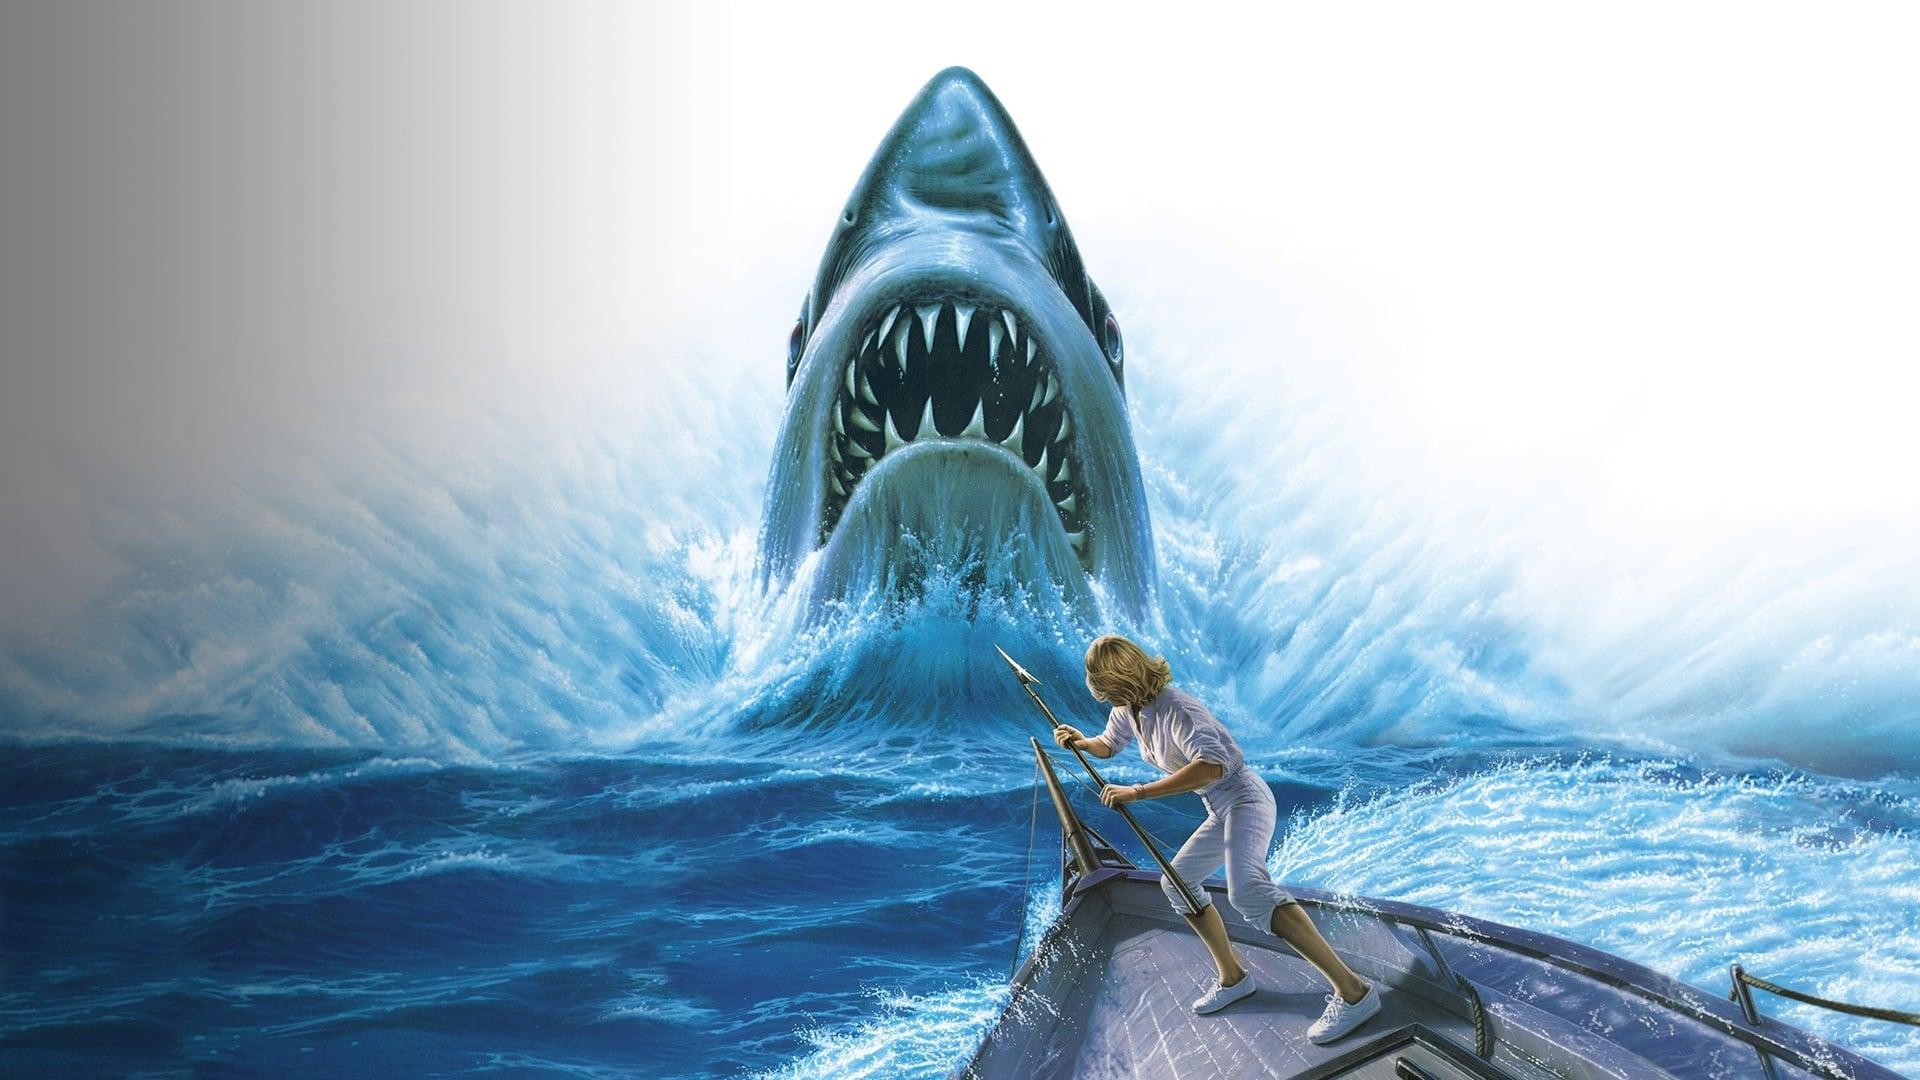 Jaws: The Revenge backdrop